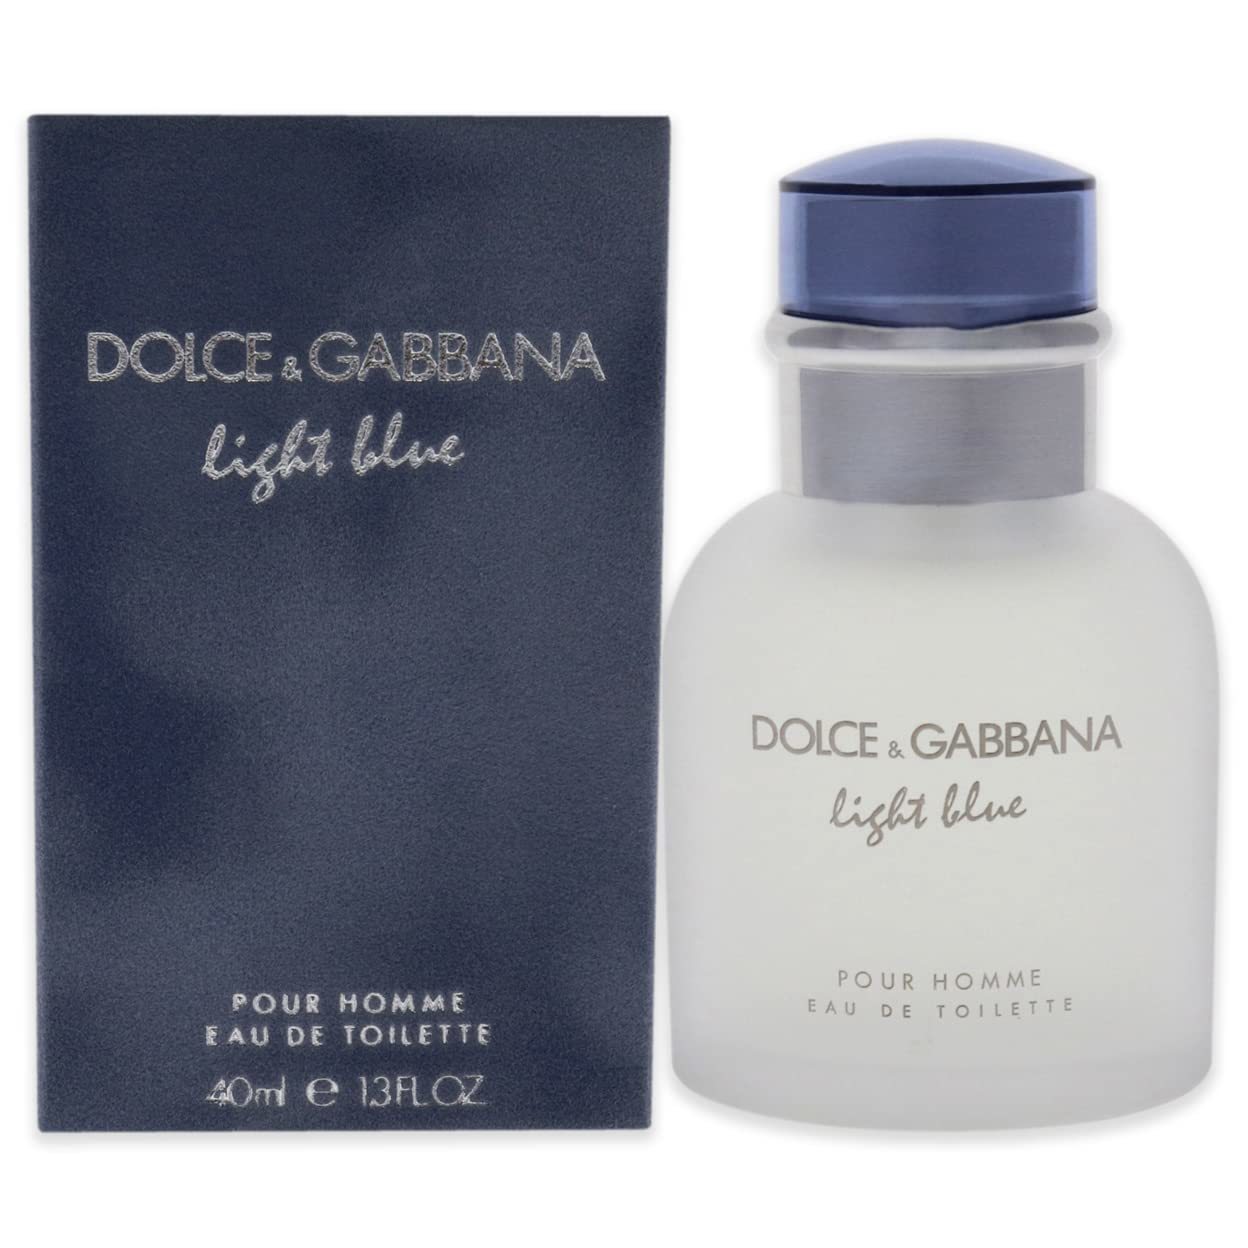 D & G Light Blue by Dolce & Gabbana EDT Spray 1.3 OZ - $59.35